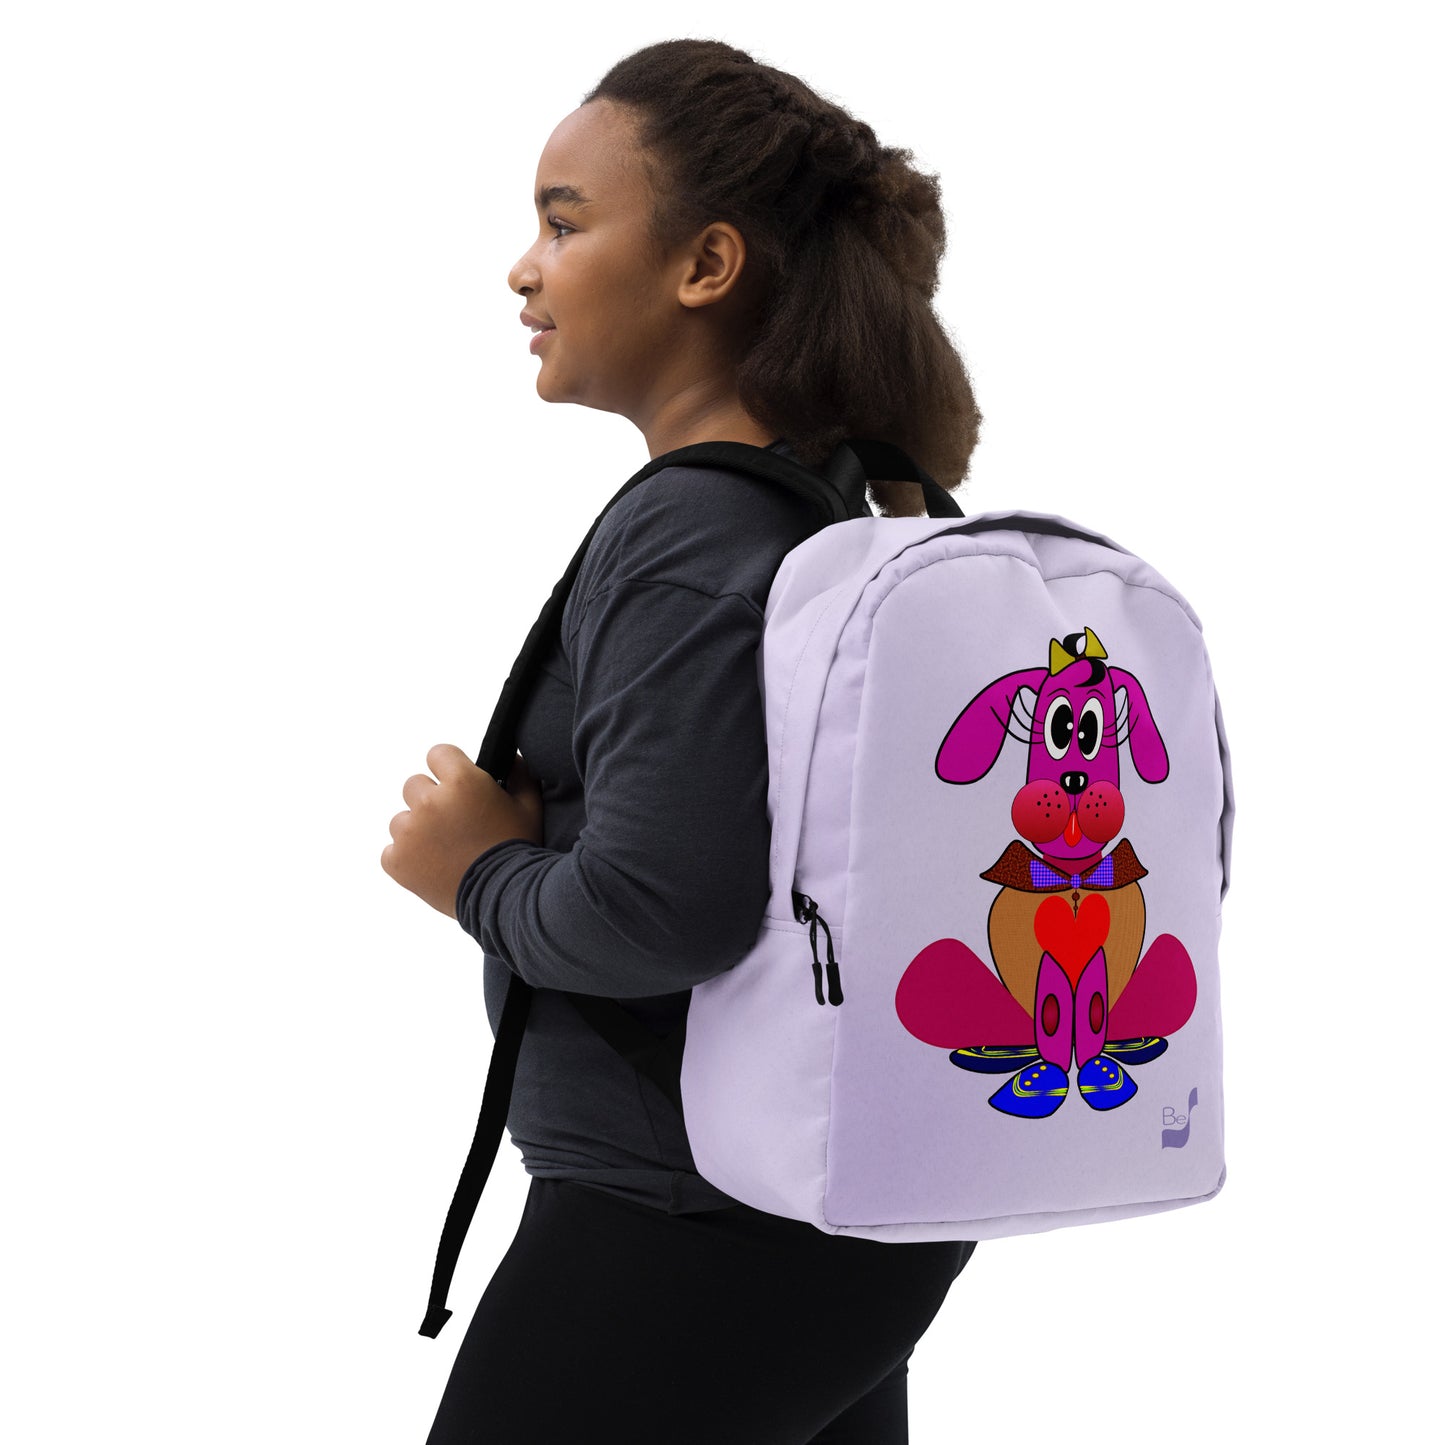 Love Pup 4 Hot Pink BeSculpt Kids Backpack Basic